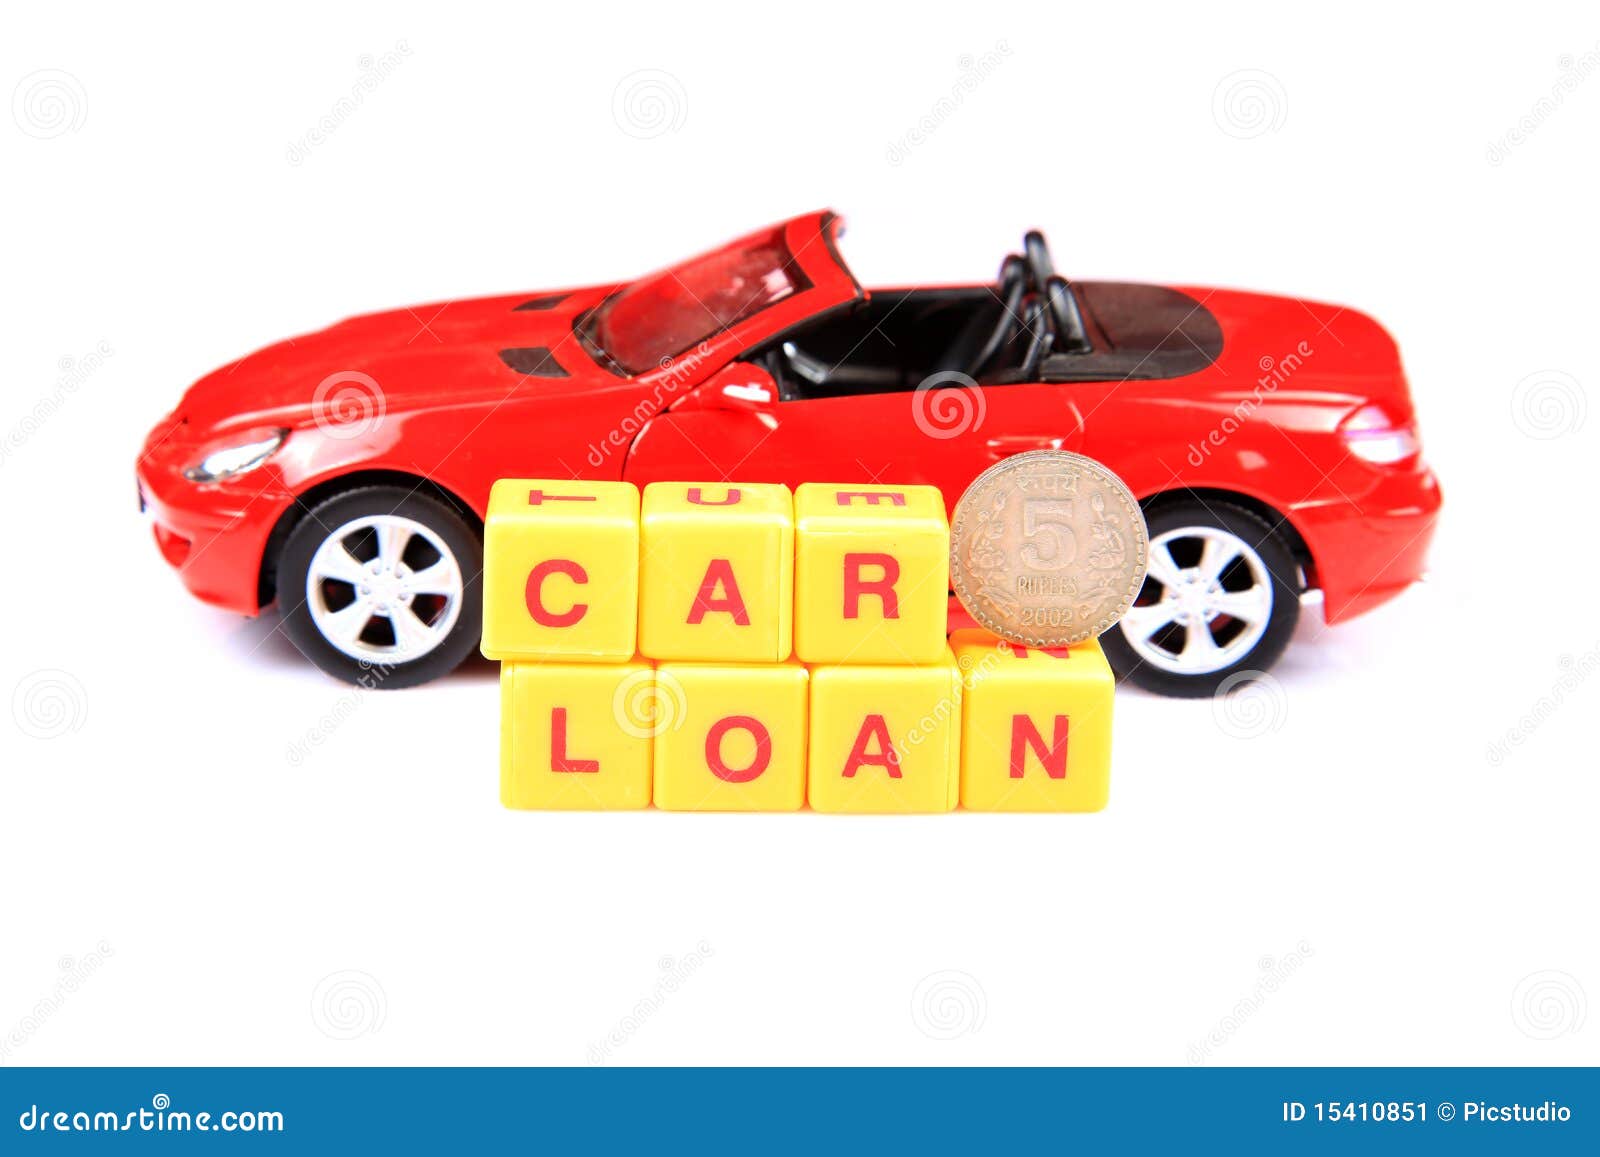 auto loan clipart - photo #1